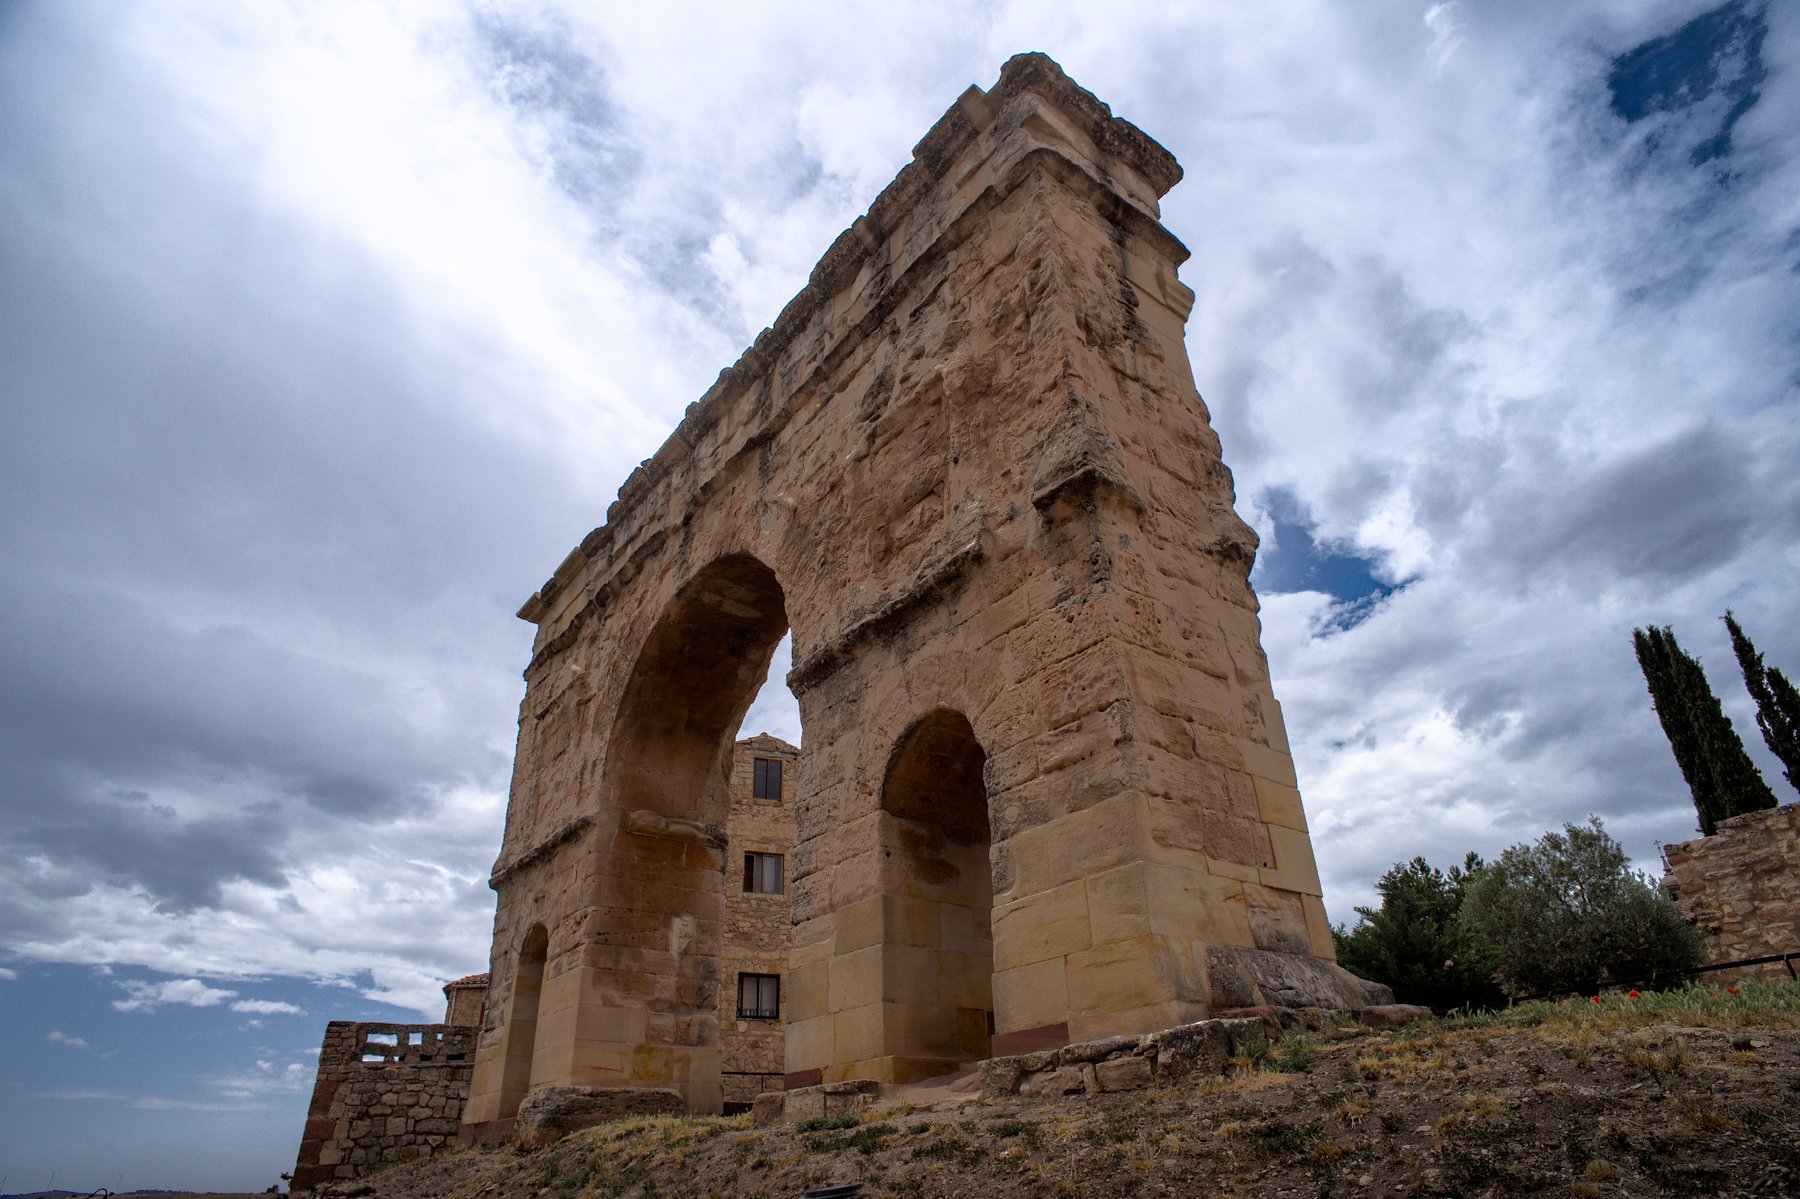 The Roman Arch, at Medinaceli in Spain